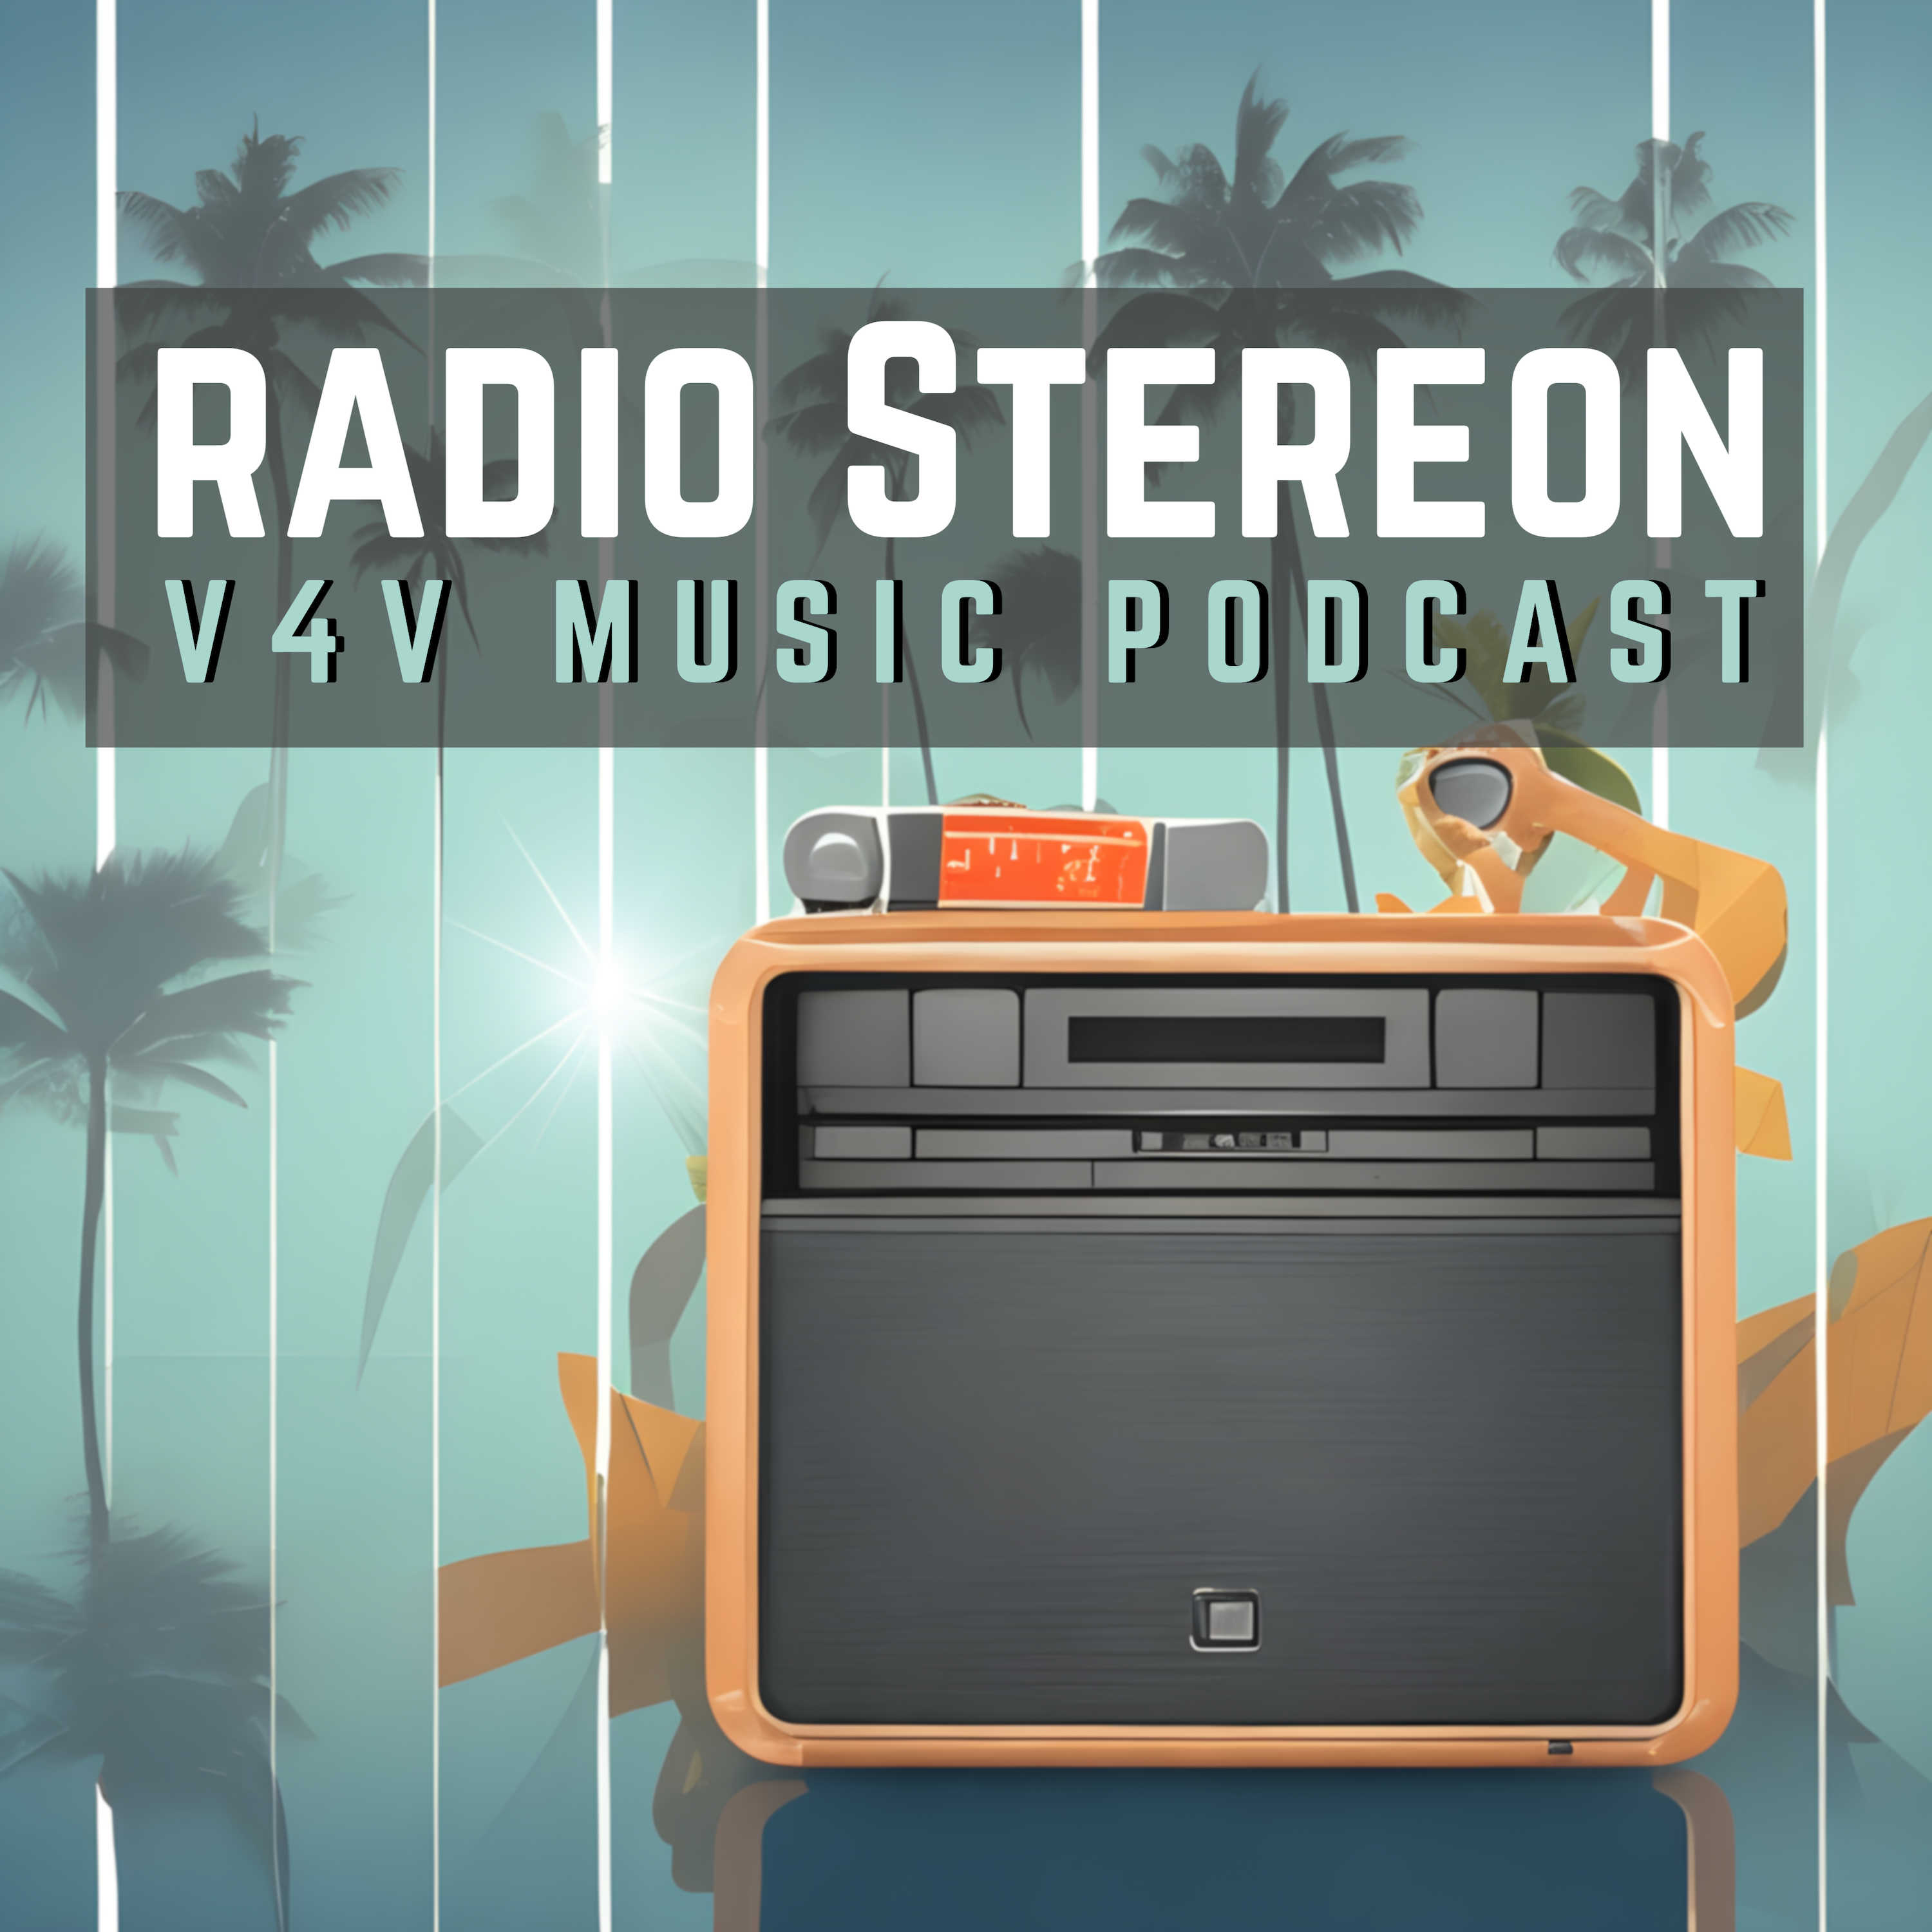 Radio Stereon